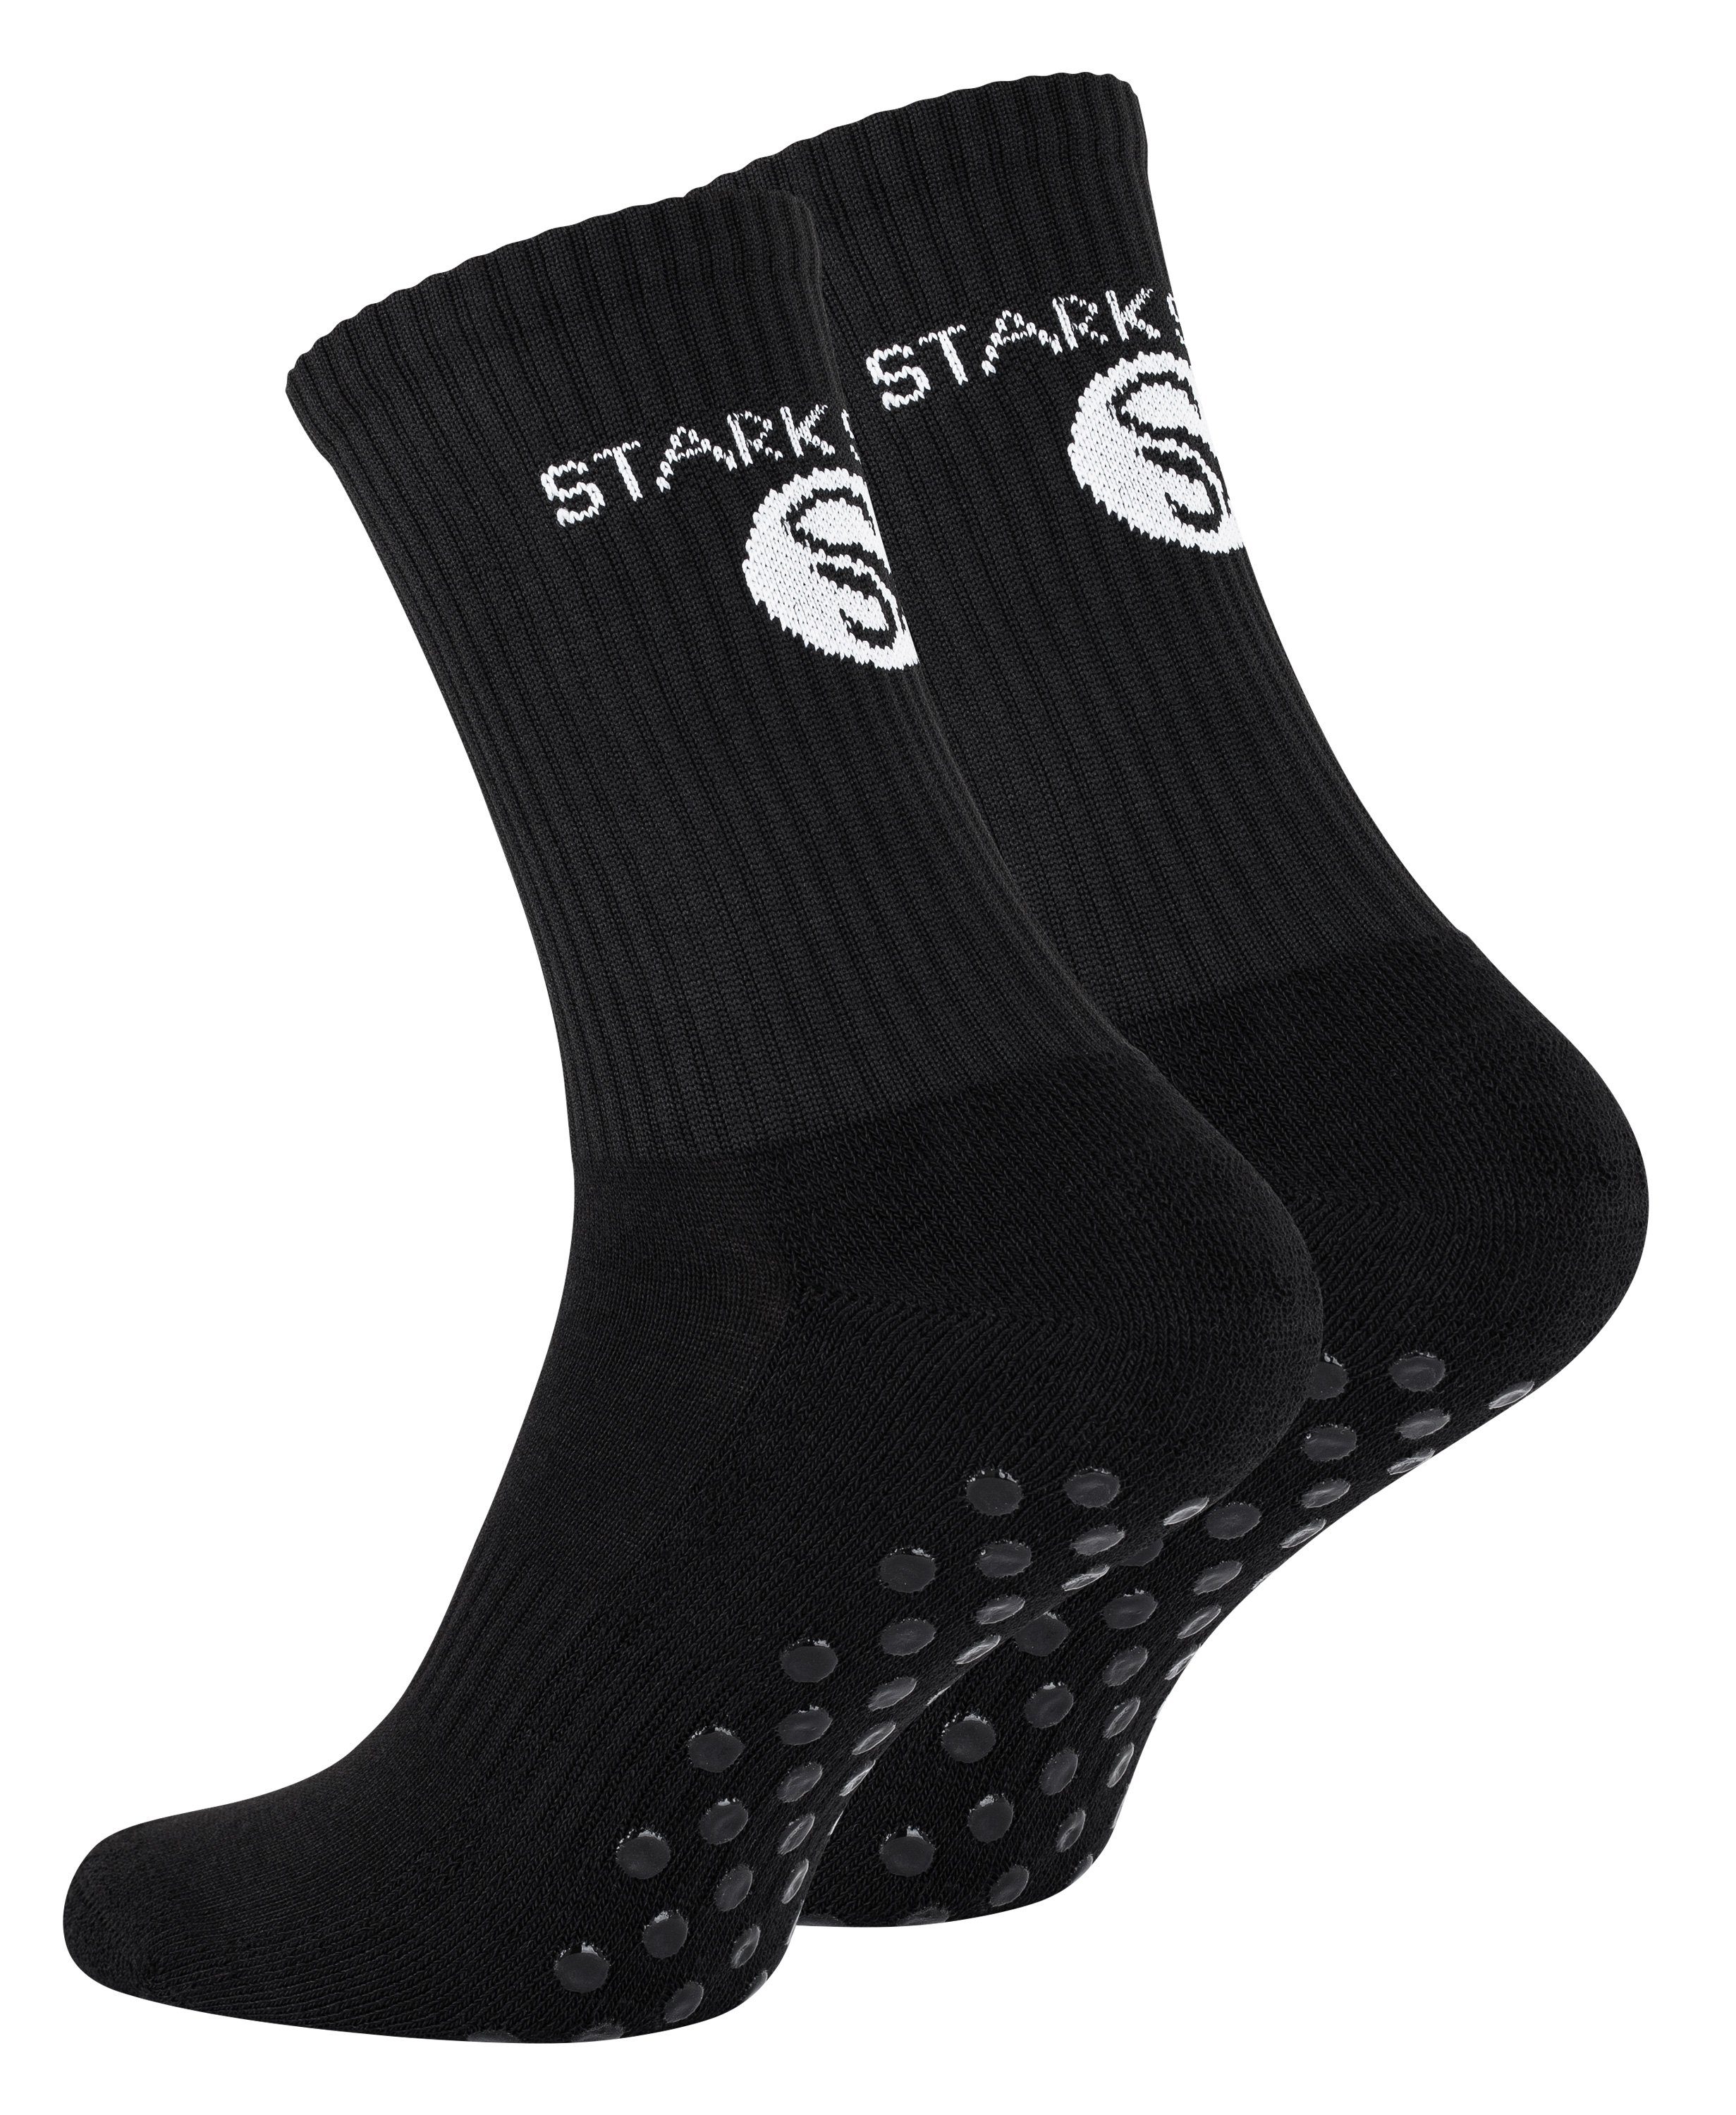 Stark Soul® Sportsocken Rutschfeste Sportsocken - Fußball Socken mit Anti-Rutsch-Sohle Schwarz